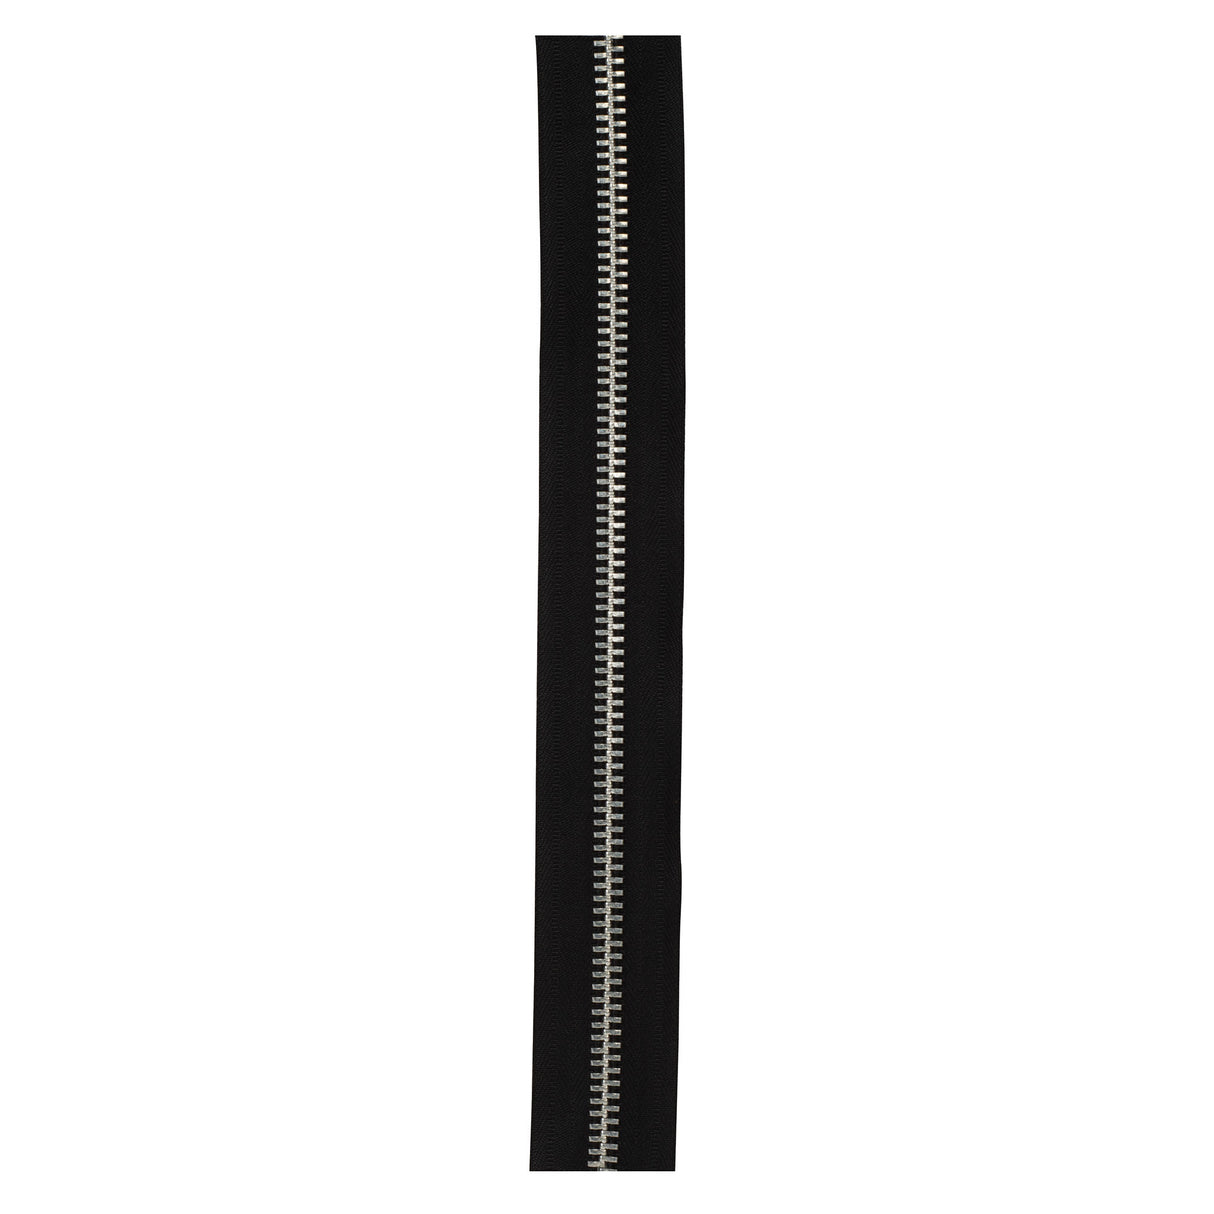 #10 Black, YKK Metal Chain Zipper Tape with Aluminum Teeth, #10M-BLK-N